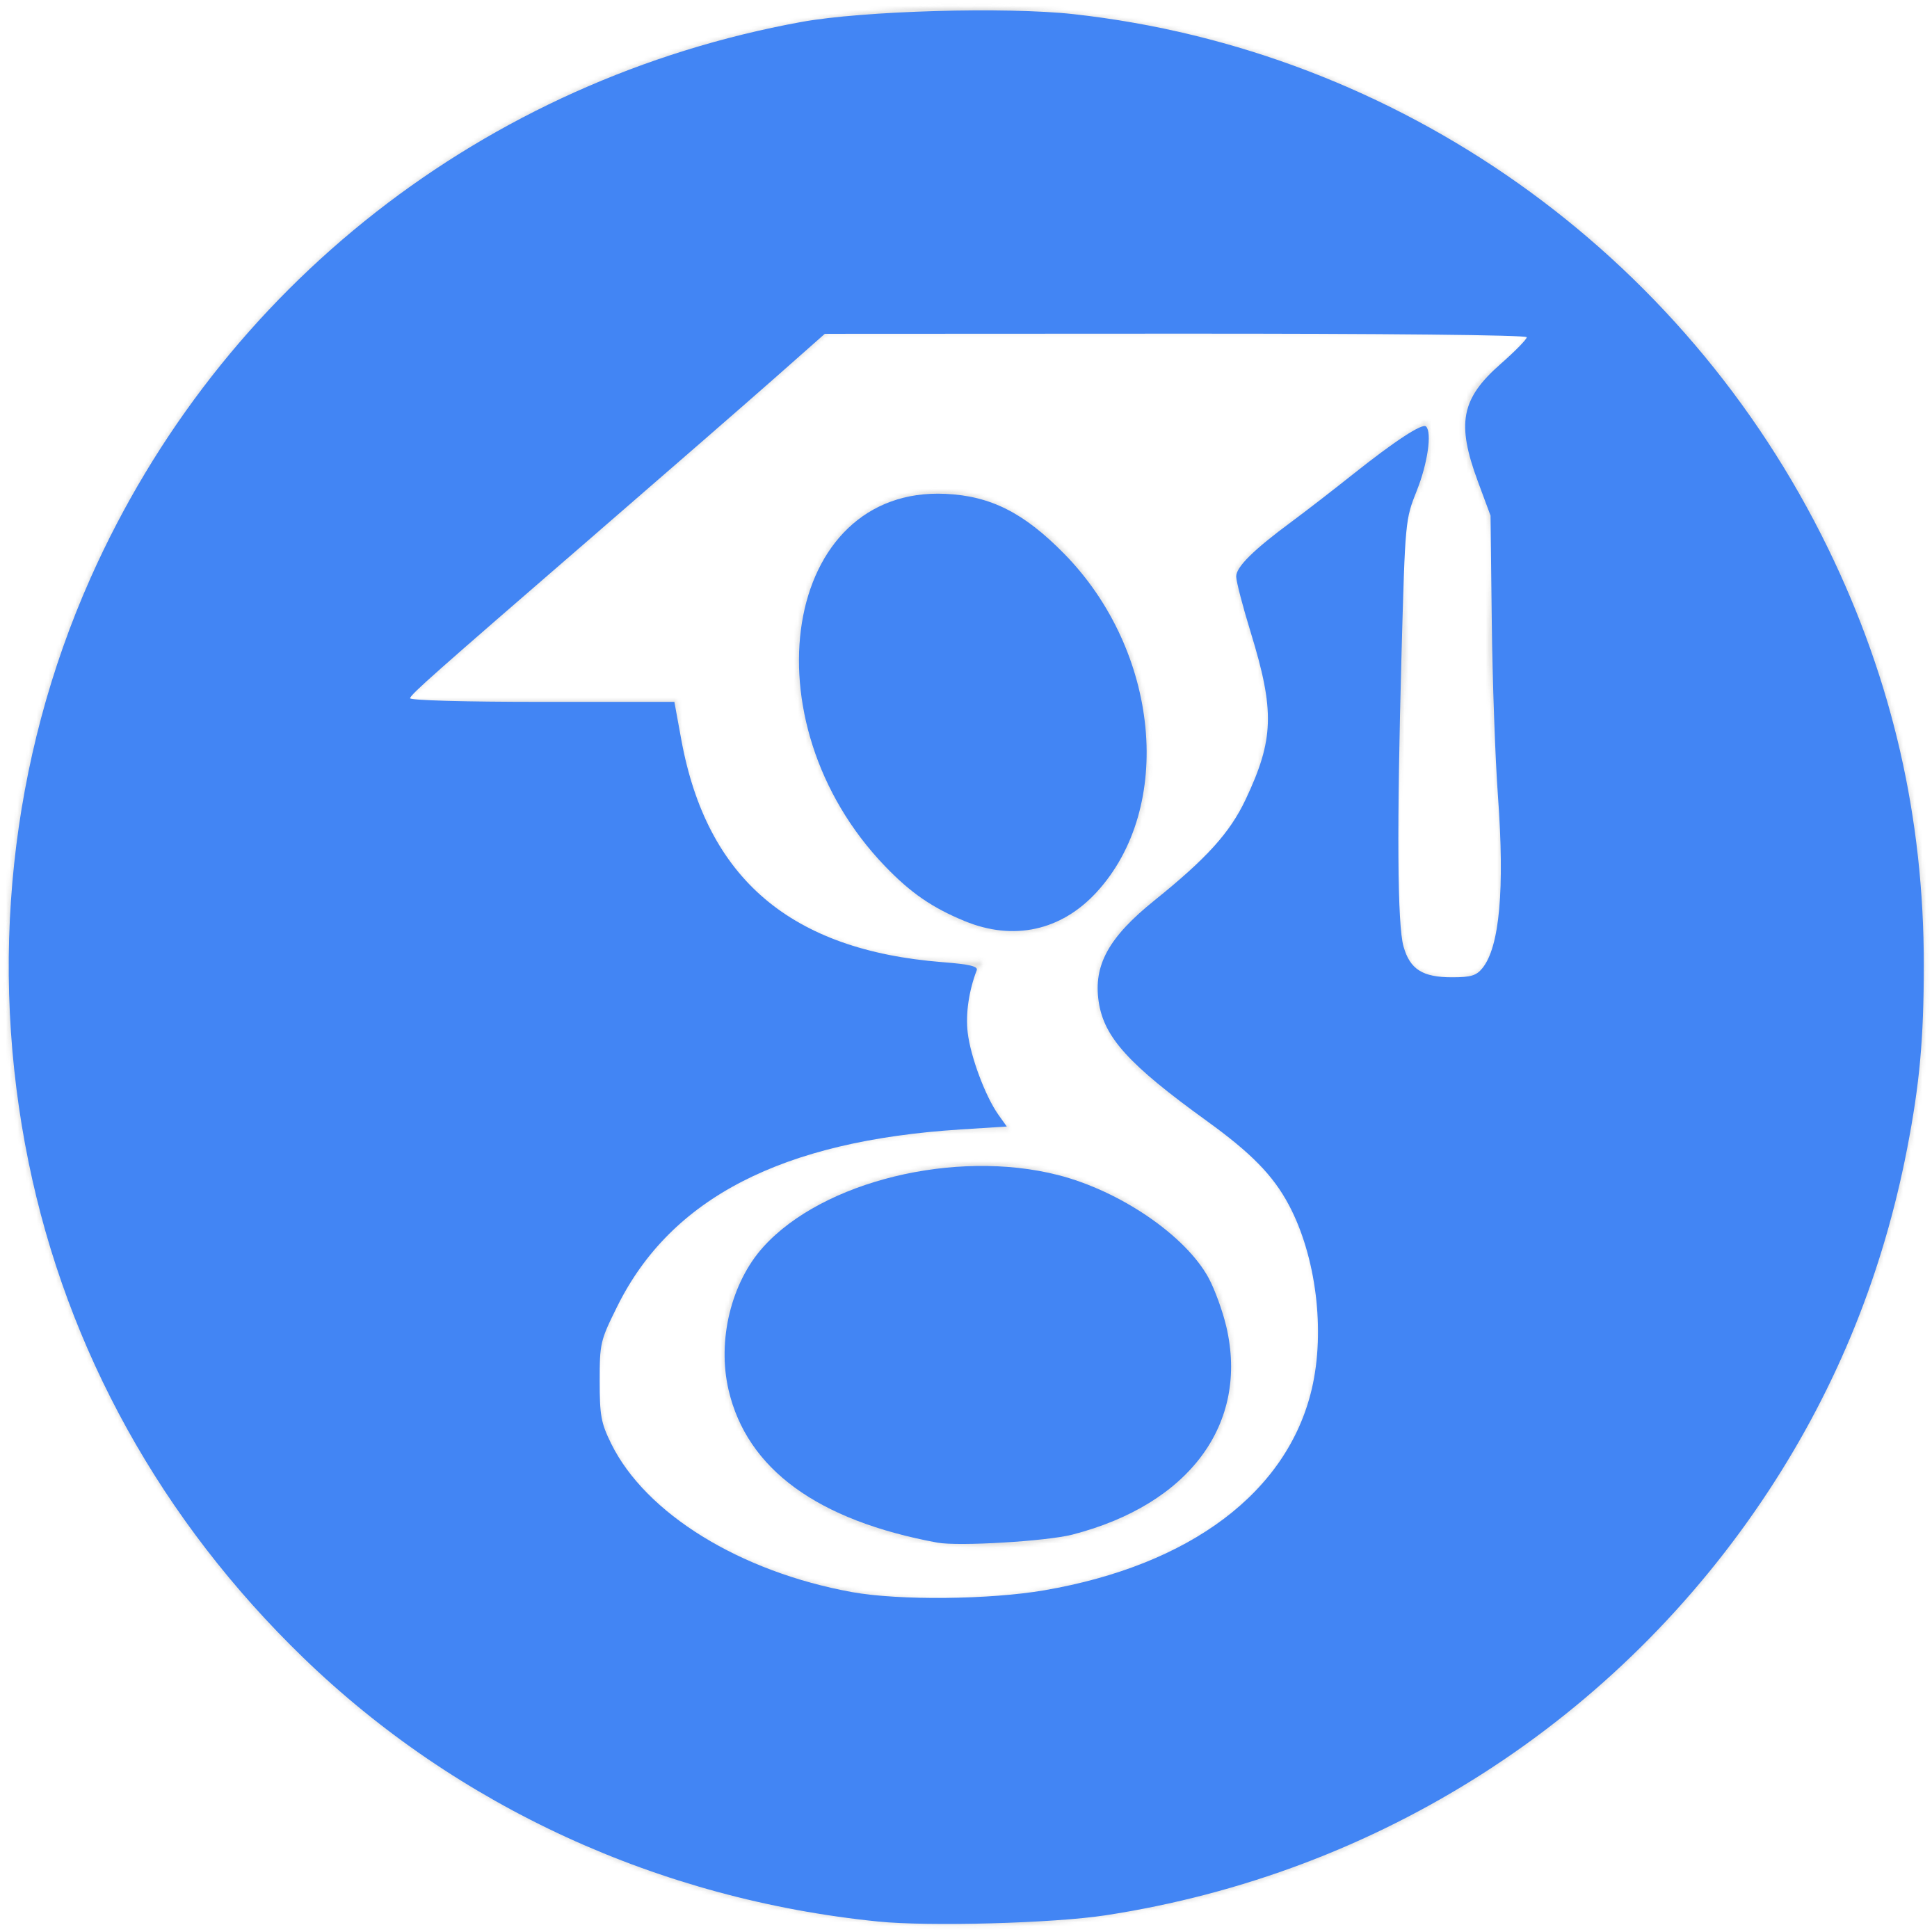 Google Scholar icon